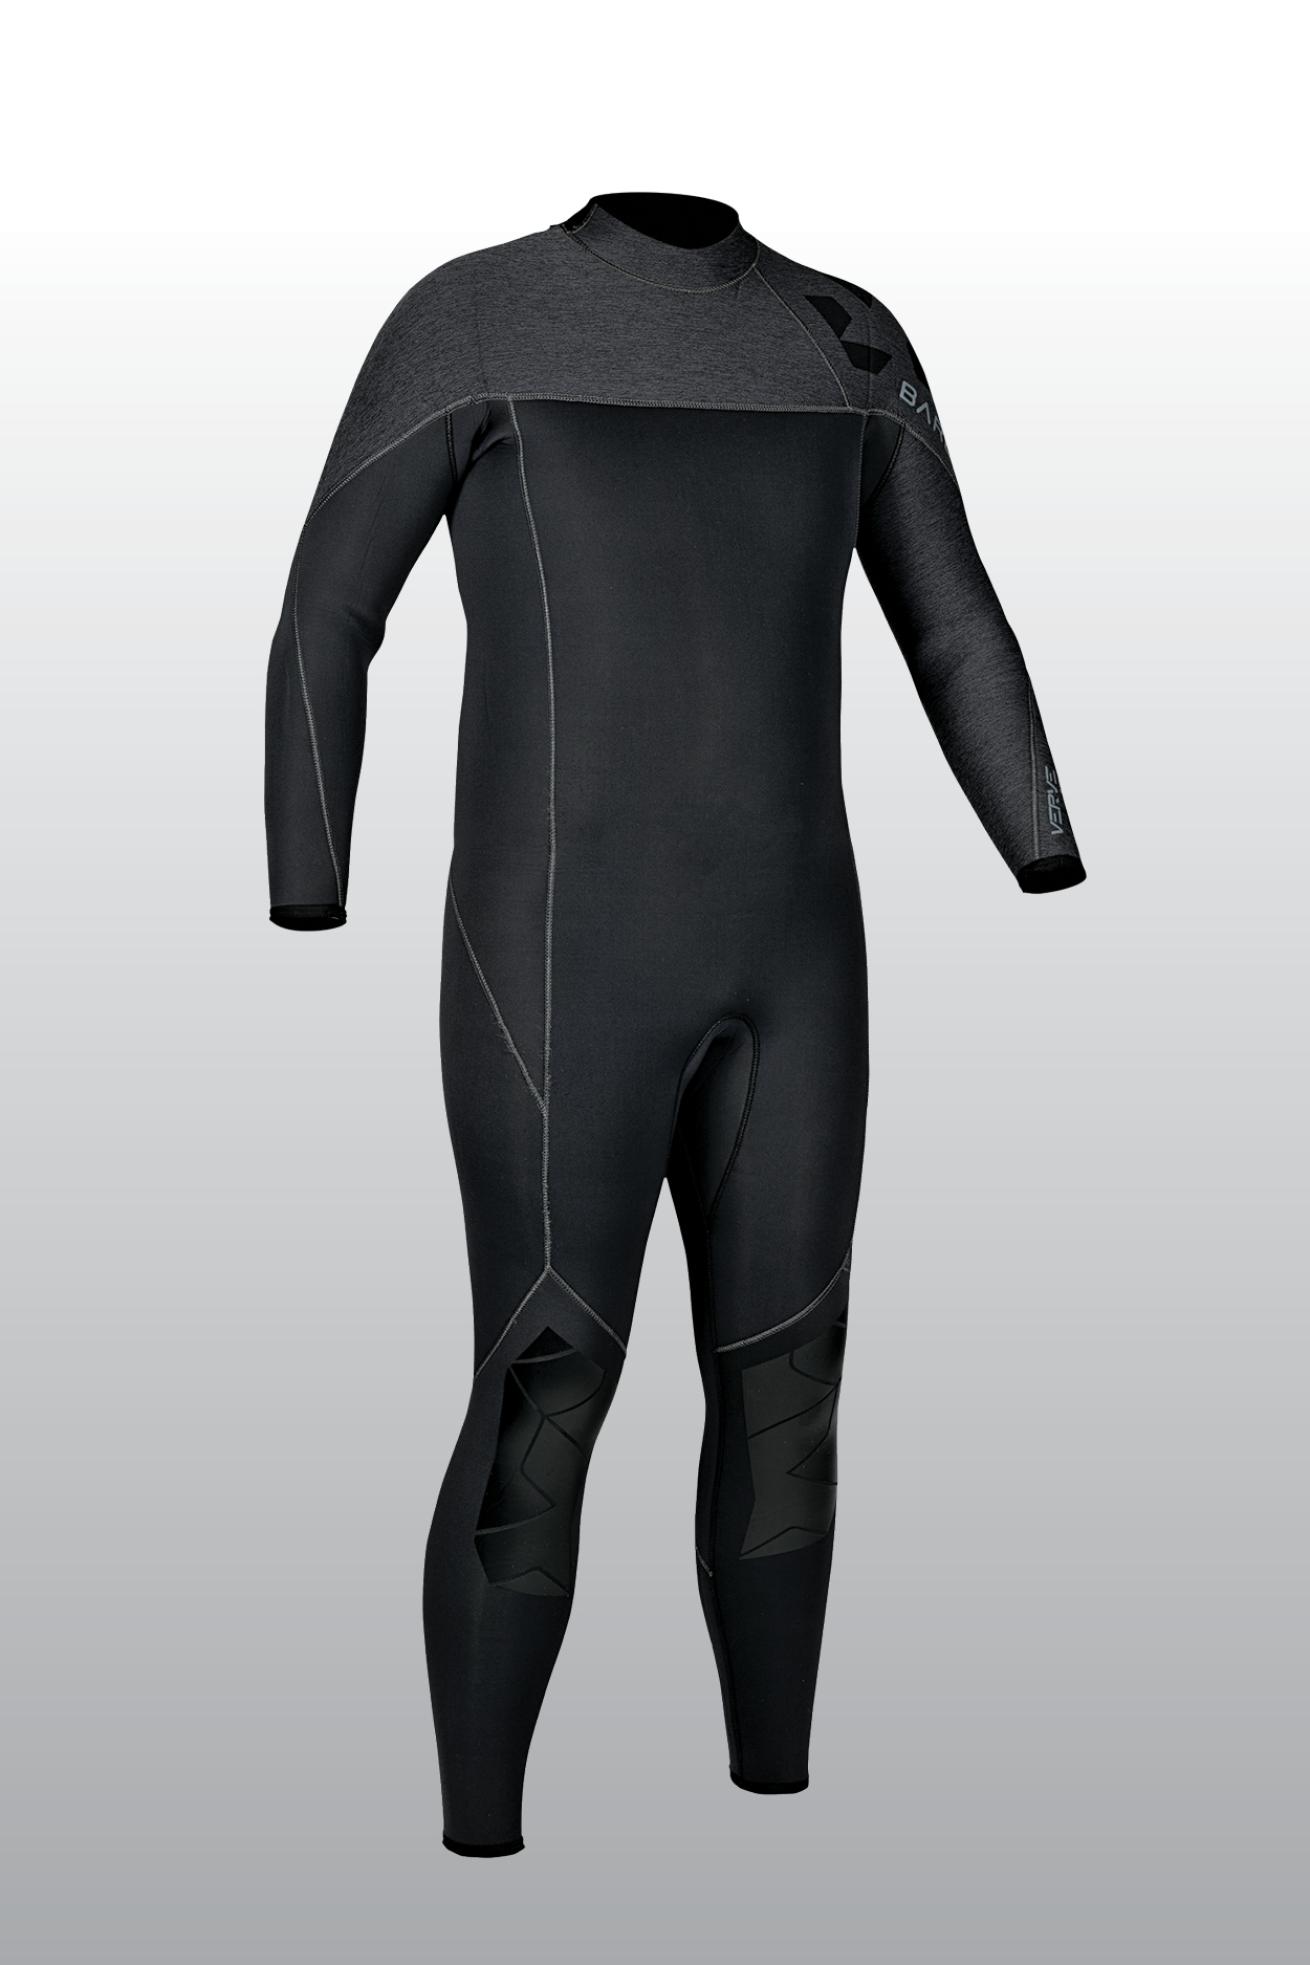 Rob Allen 2-Piece 5mm Open Cell Wetsuit ($465)